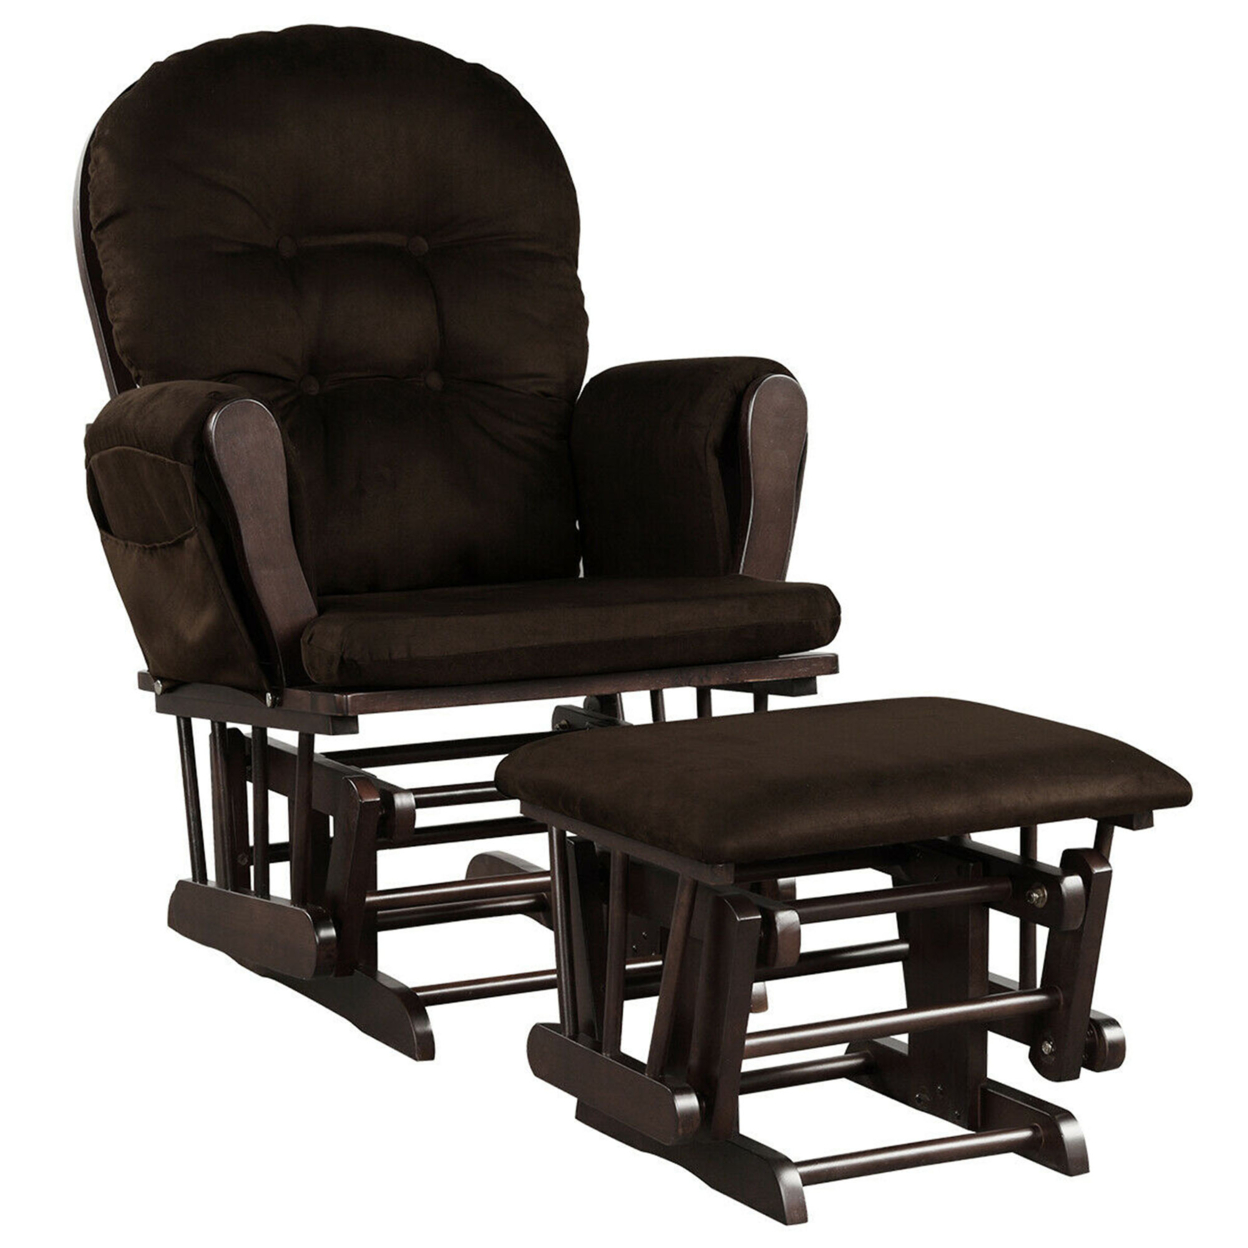 Baby Nursery Relax Rocker Rocking Chair Glider & Ottoman Set W/ Cushion - Brown